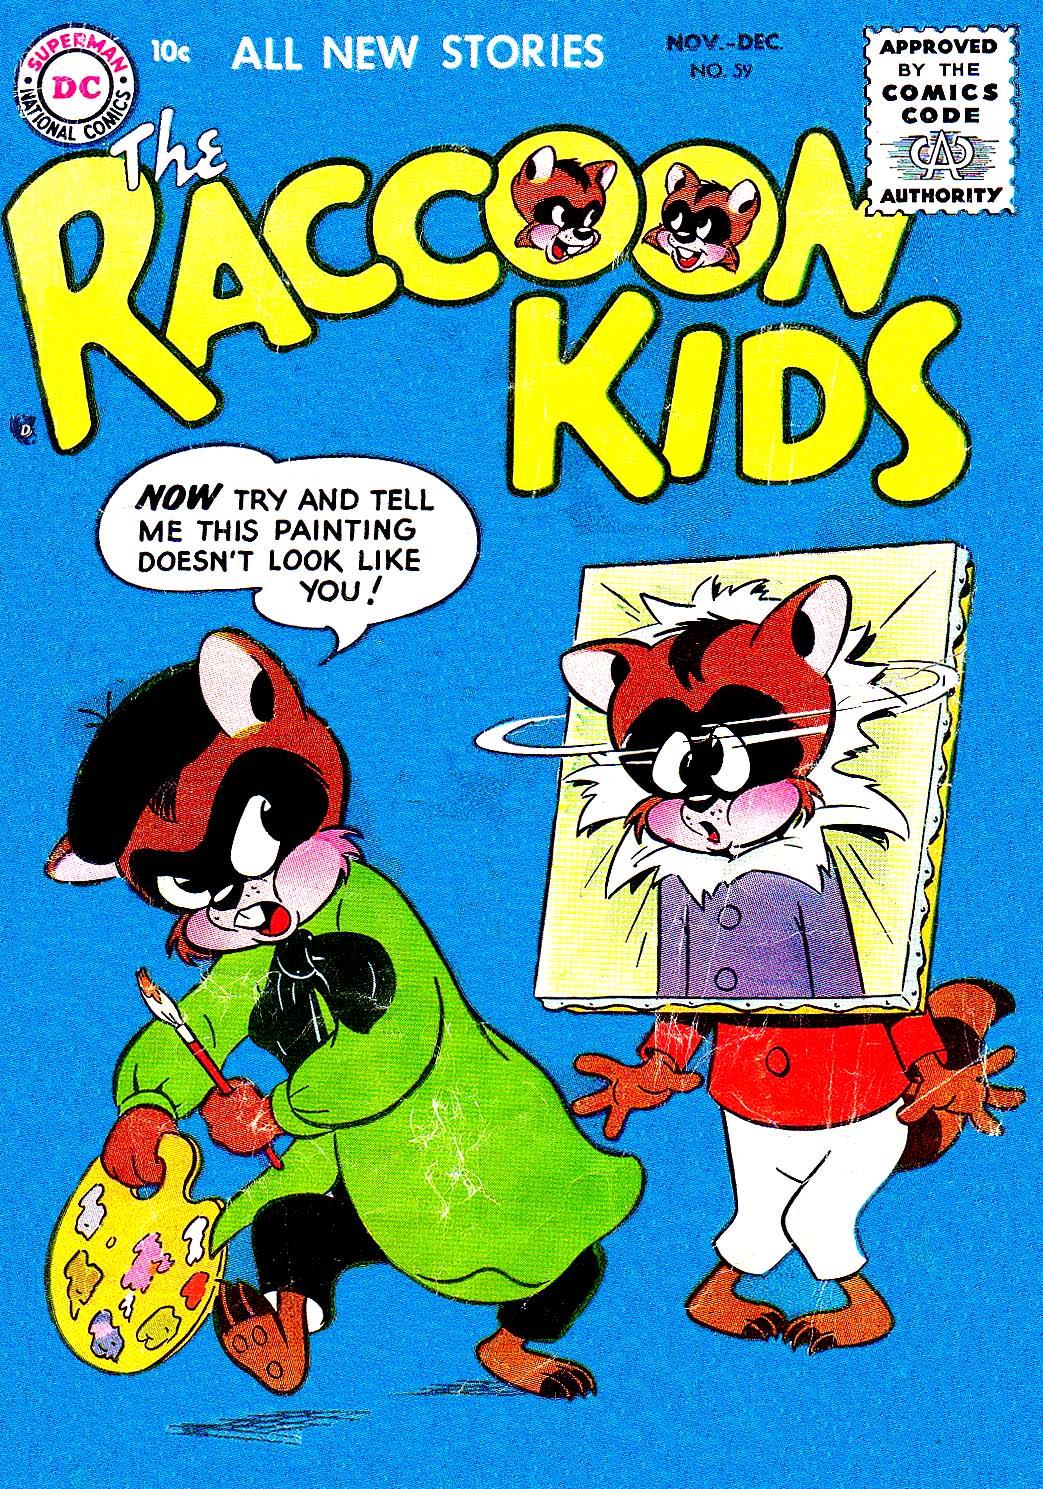 Raccoon Kids Vol. 1 #59